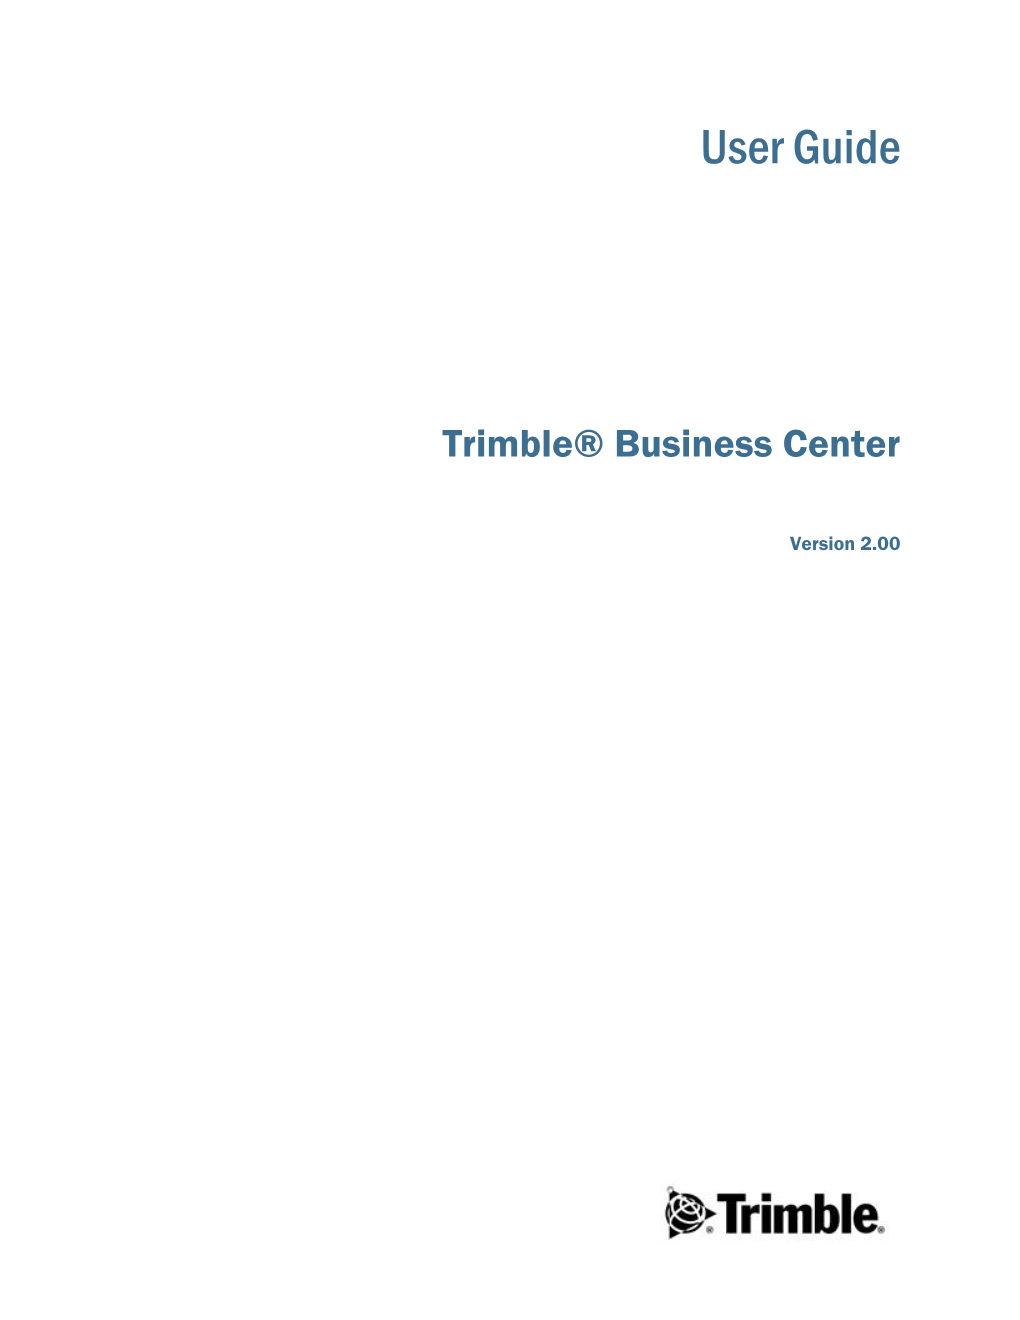 Trimble Business Center User Guide